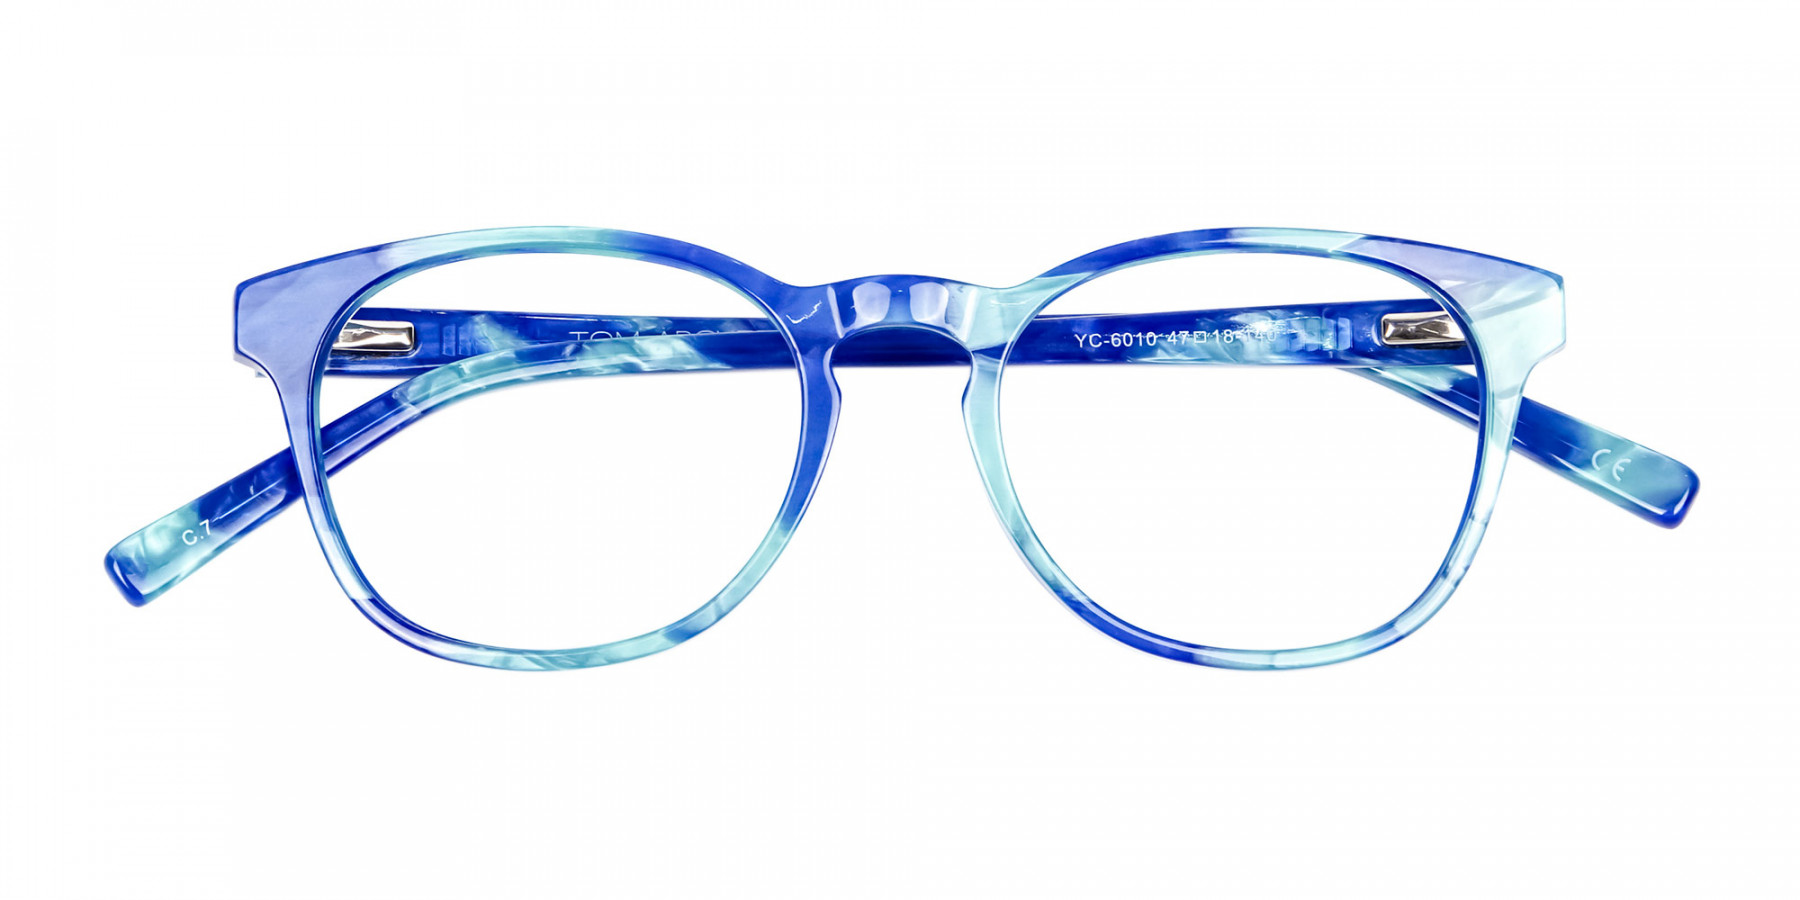 Marble Blue Reading Glasses -1